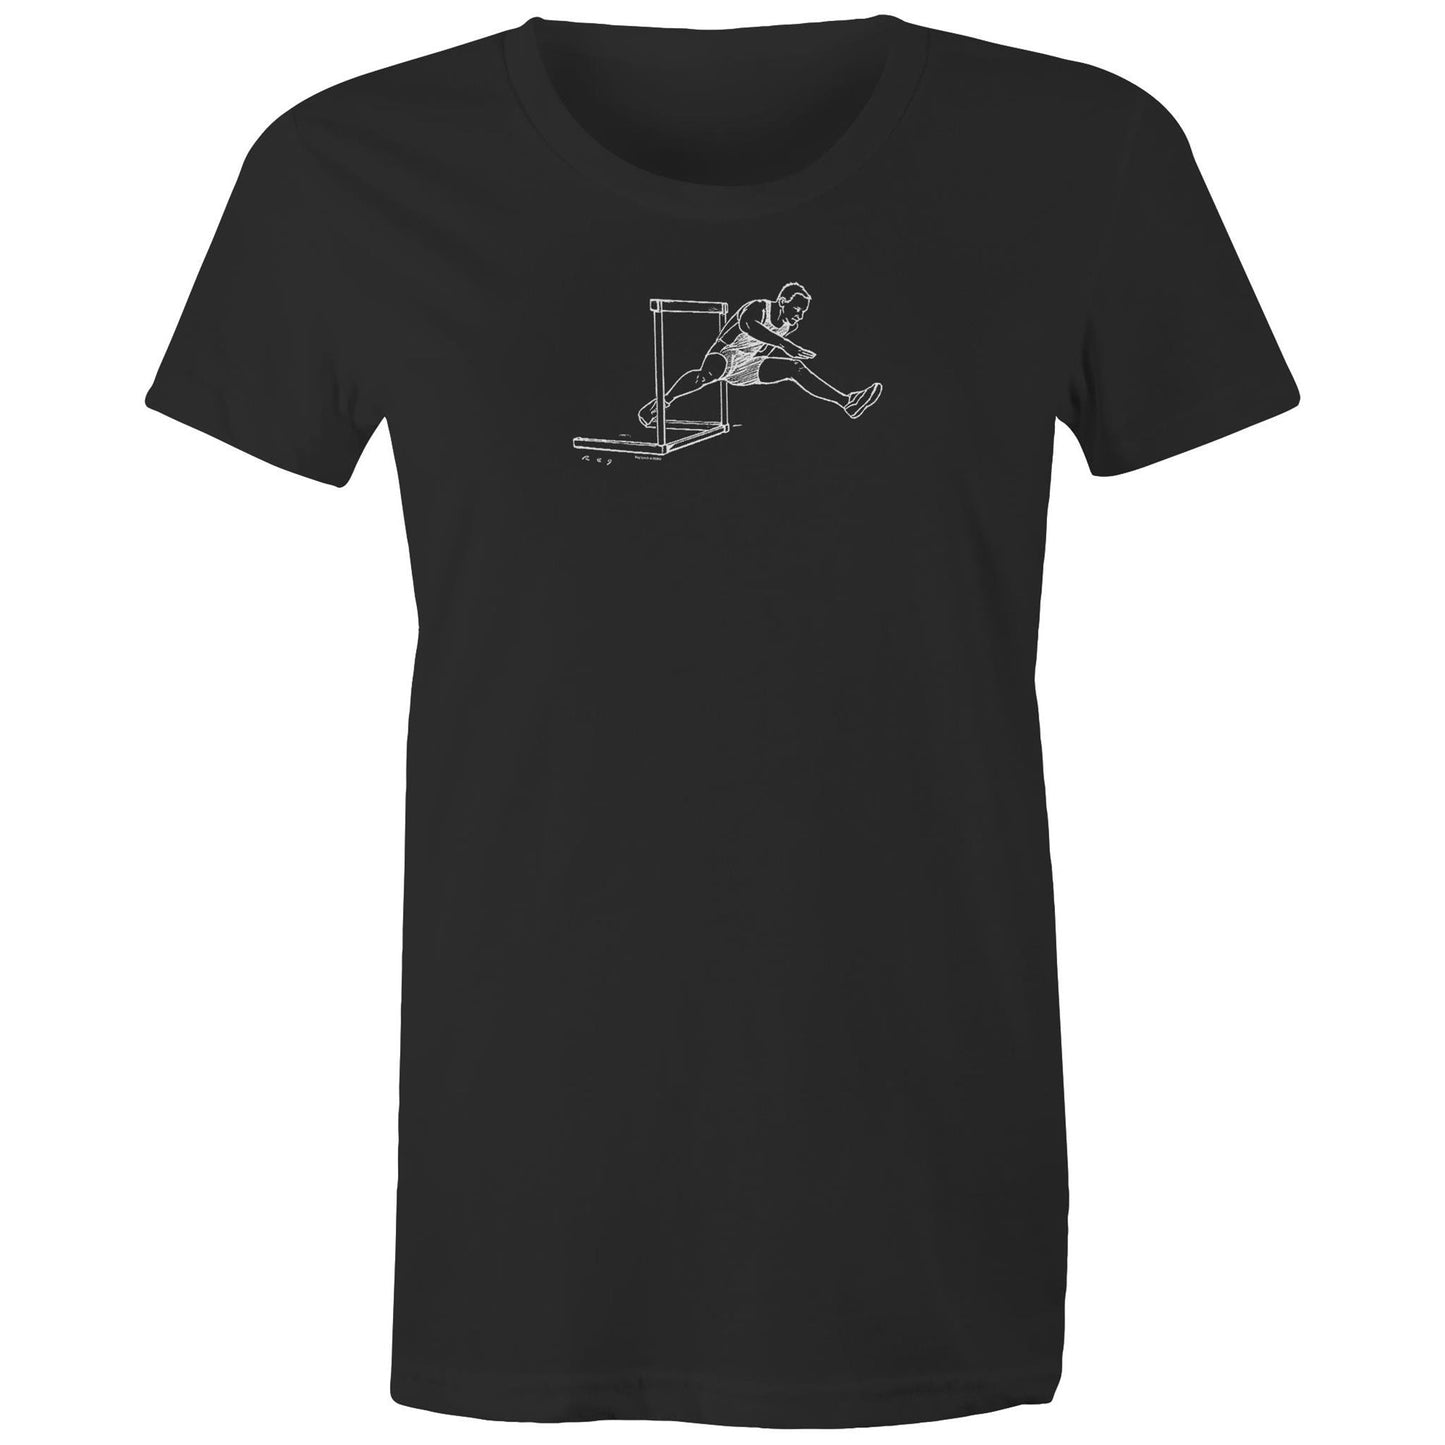 Hurdler T Shirts for Women